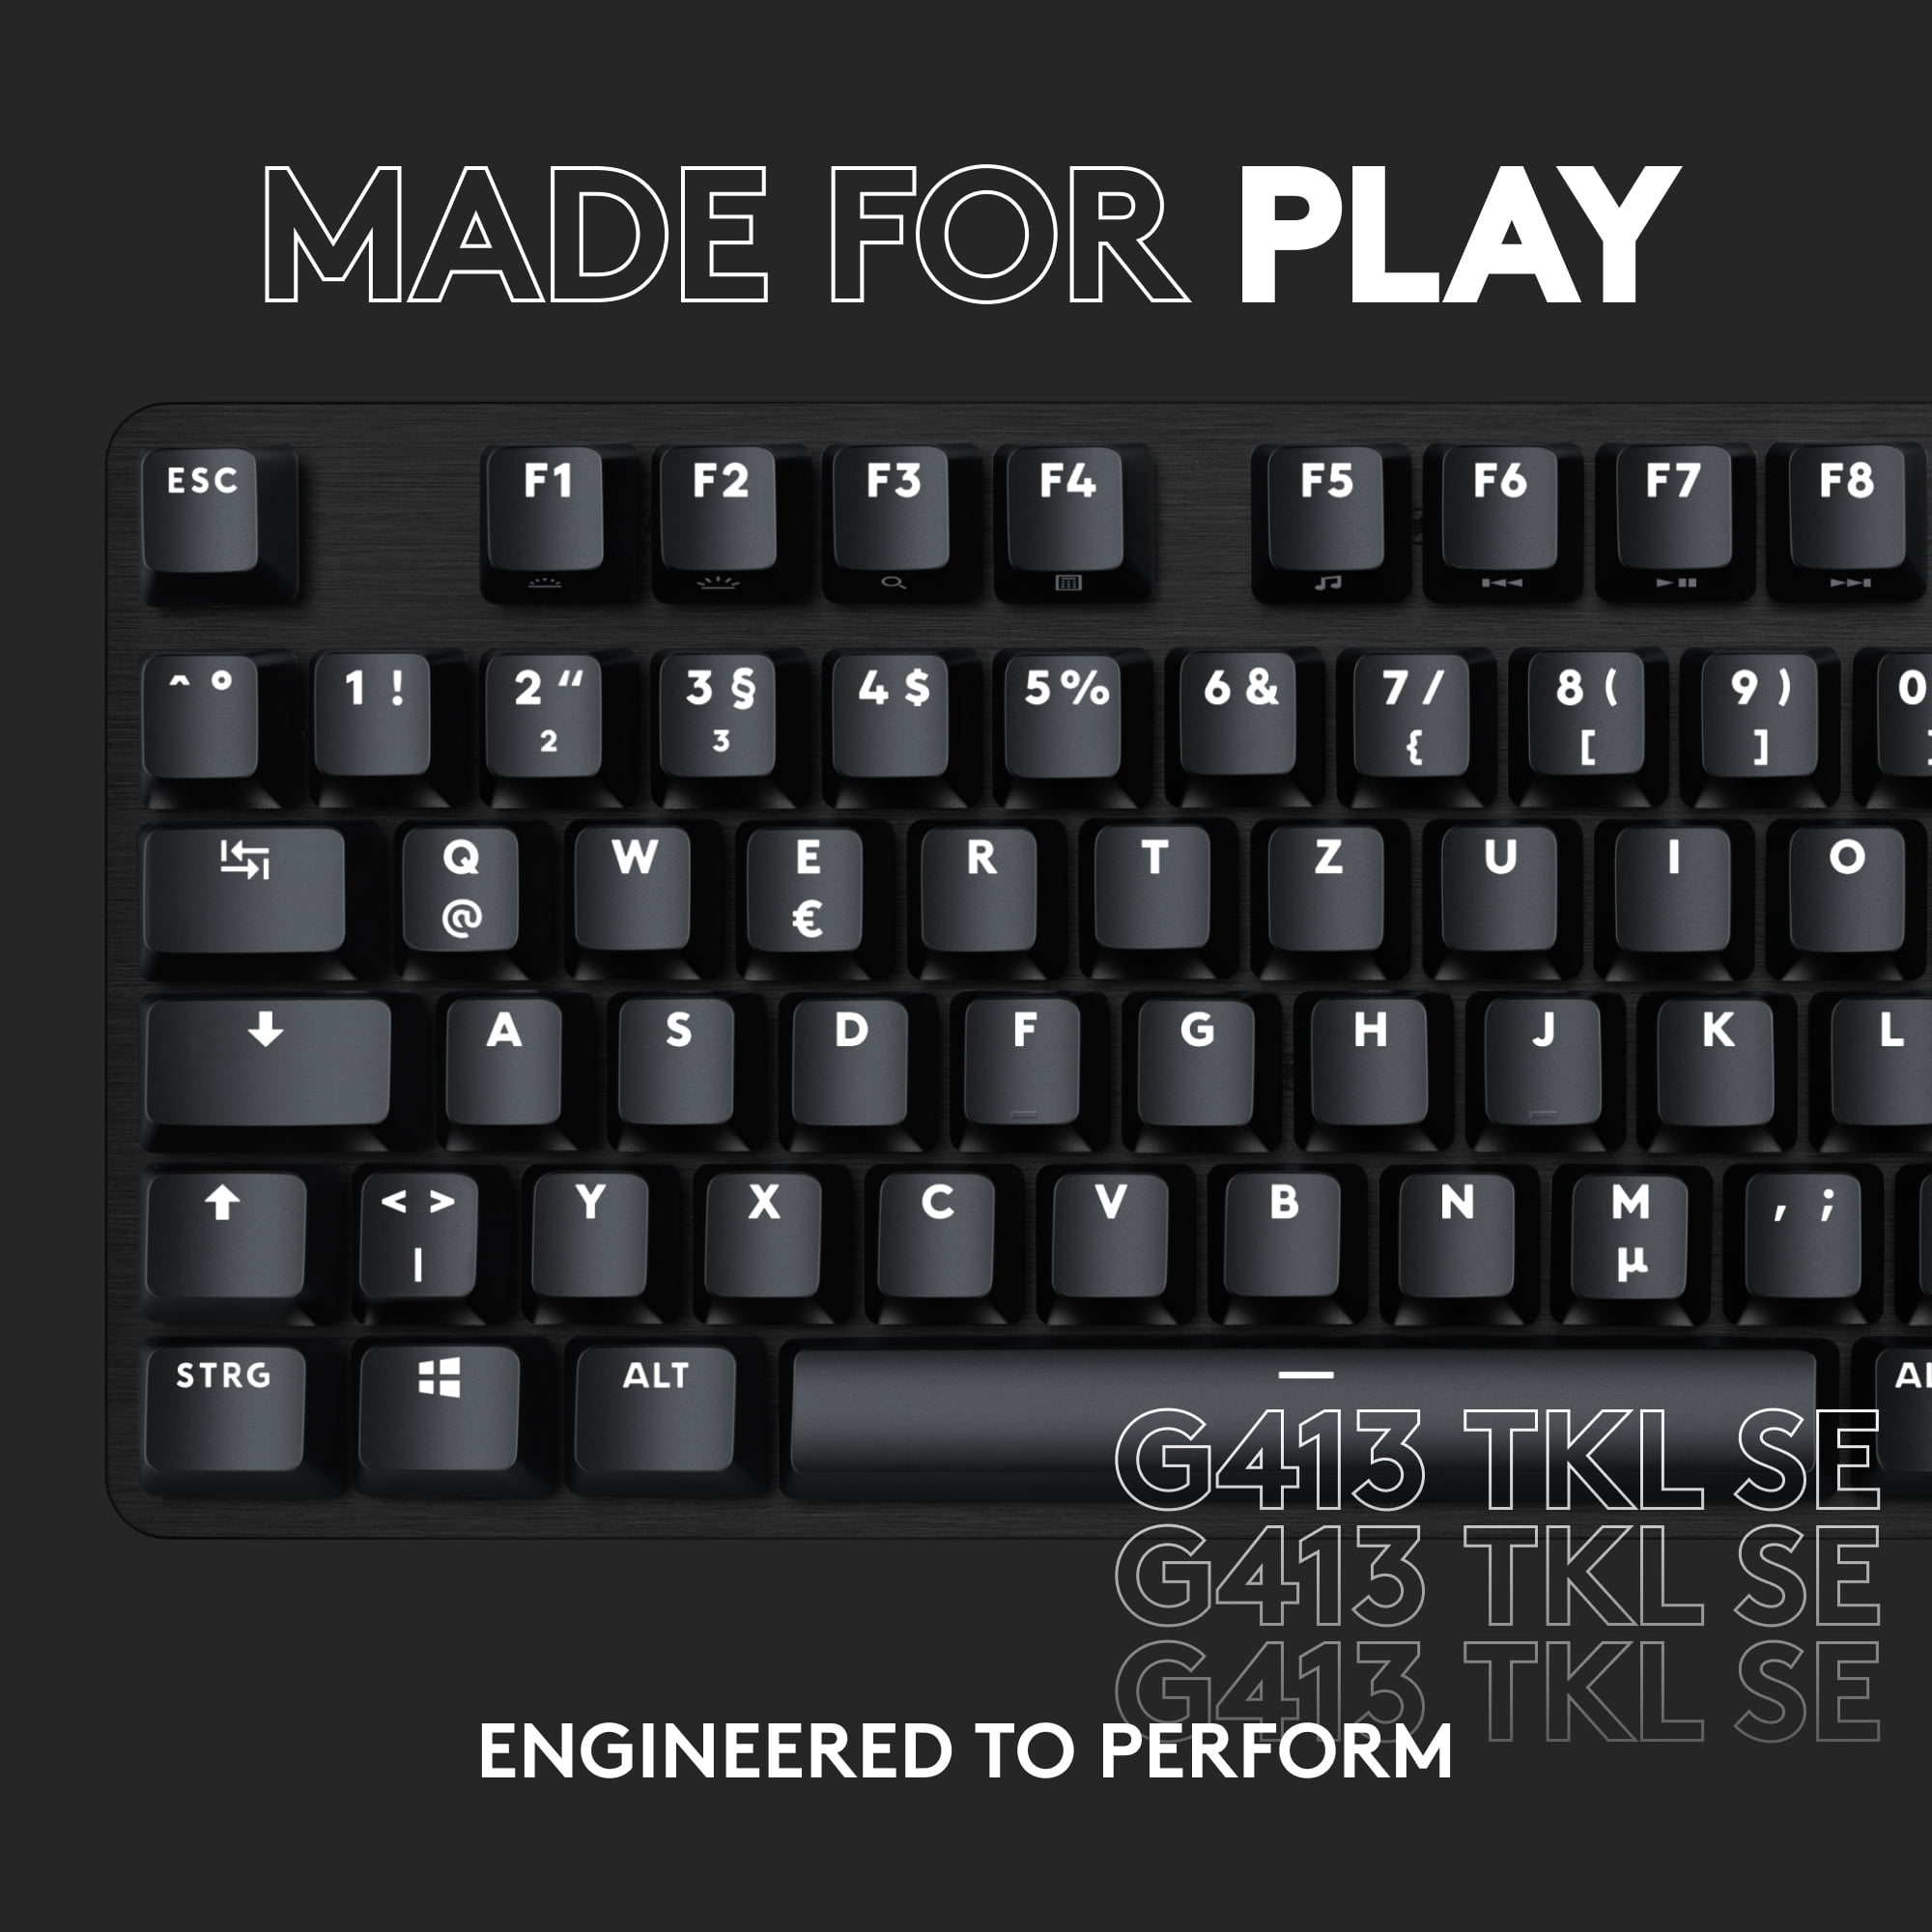 Logitech G413 TKL SE Mechanical Gaming Keyboard - Black, English - US